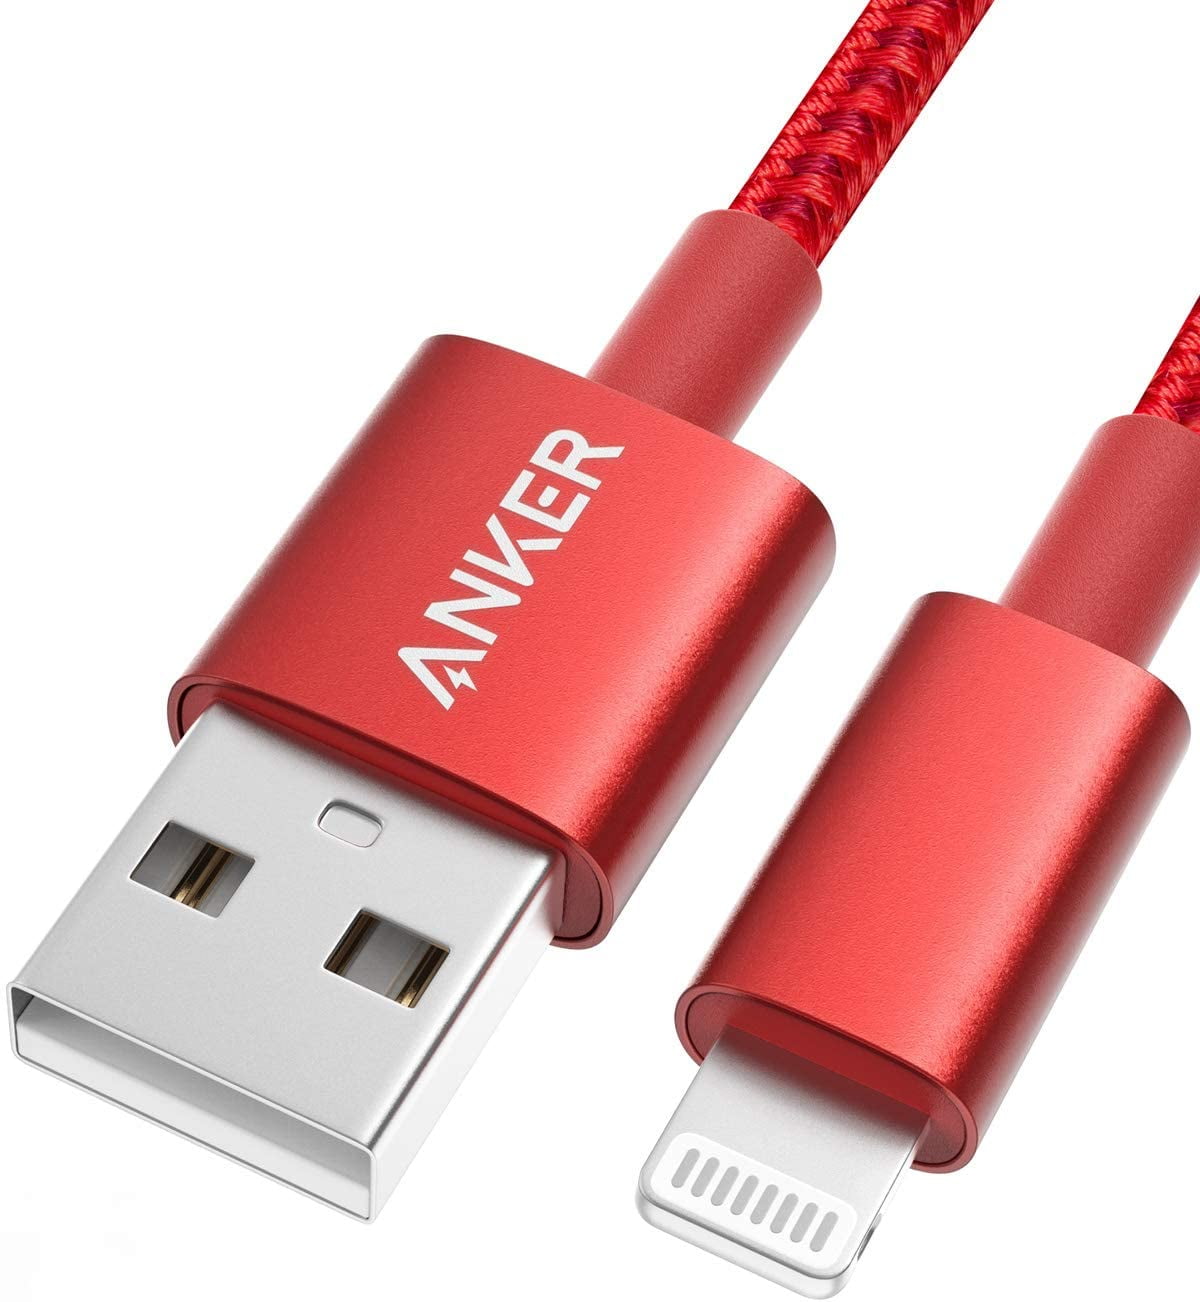 Anker Lightning Cable Premium Nylon Cord MFi Certified Charging Data Red Walmart.com